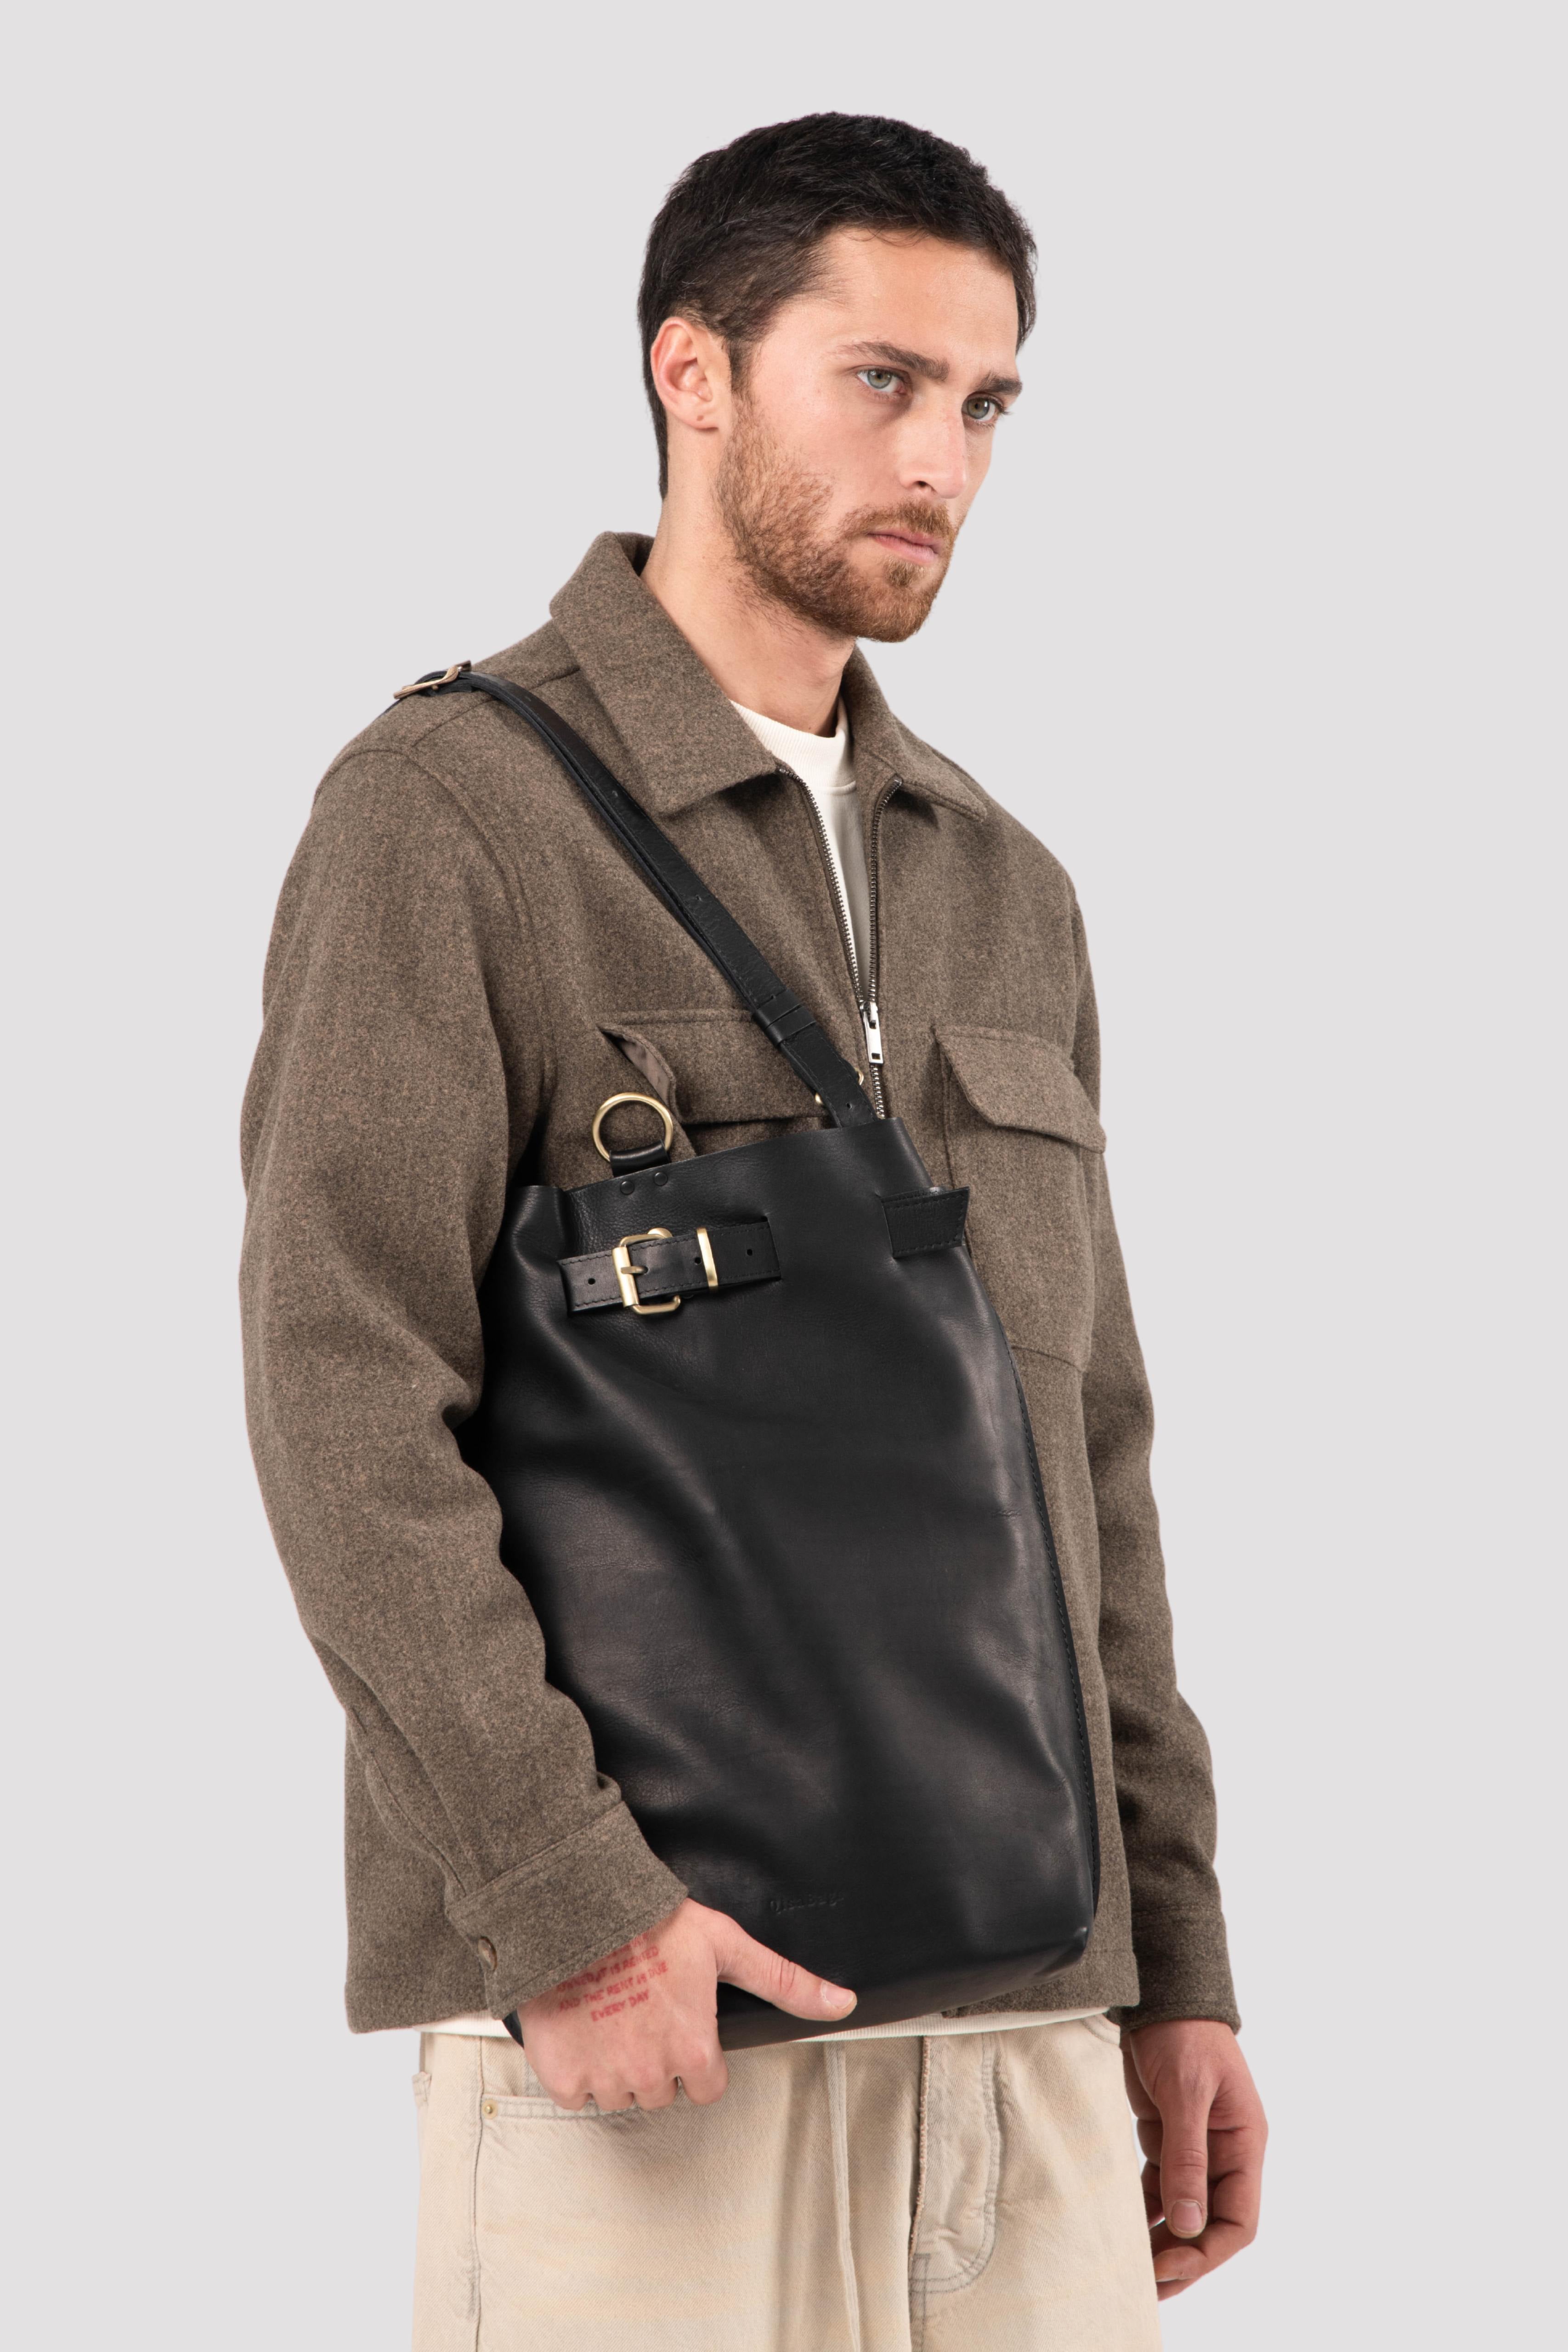 Handbag for rent Gucci GG Marmont - Rent Fashion Bag